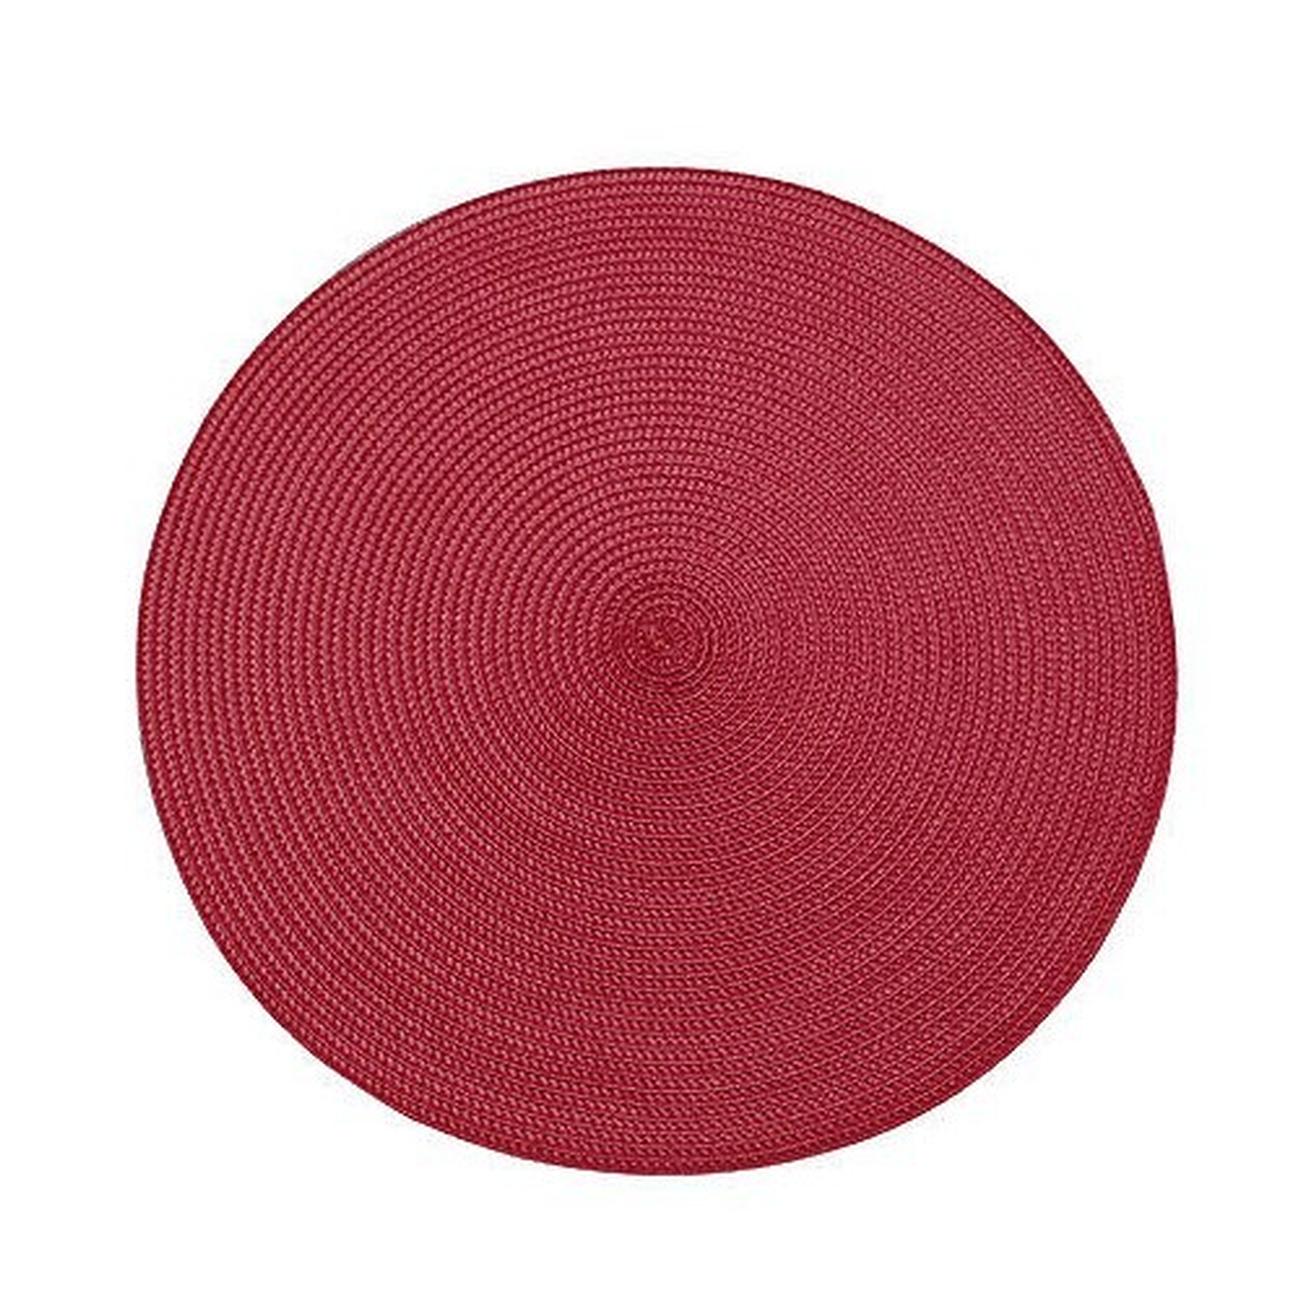 walton-ribbed-round-placemat-red - Walton & Co Circular Ribbed Placemat Red